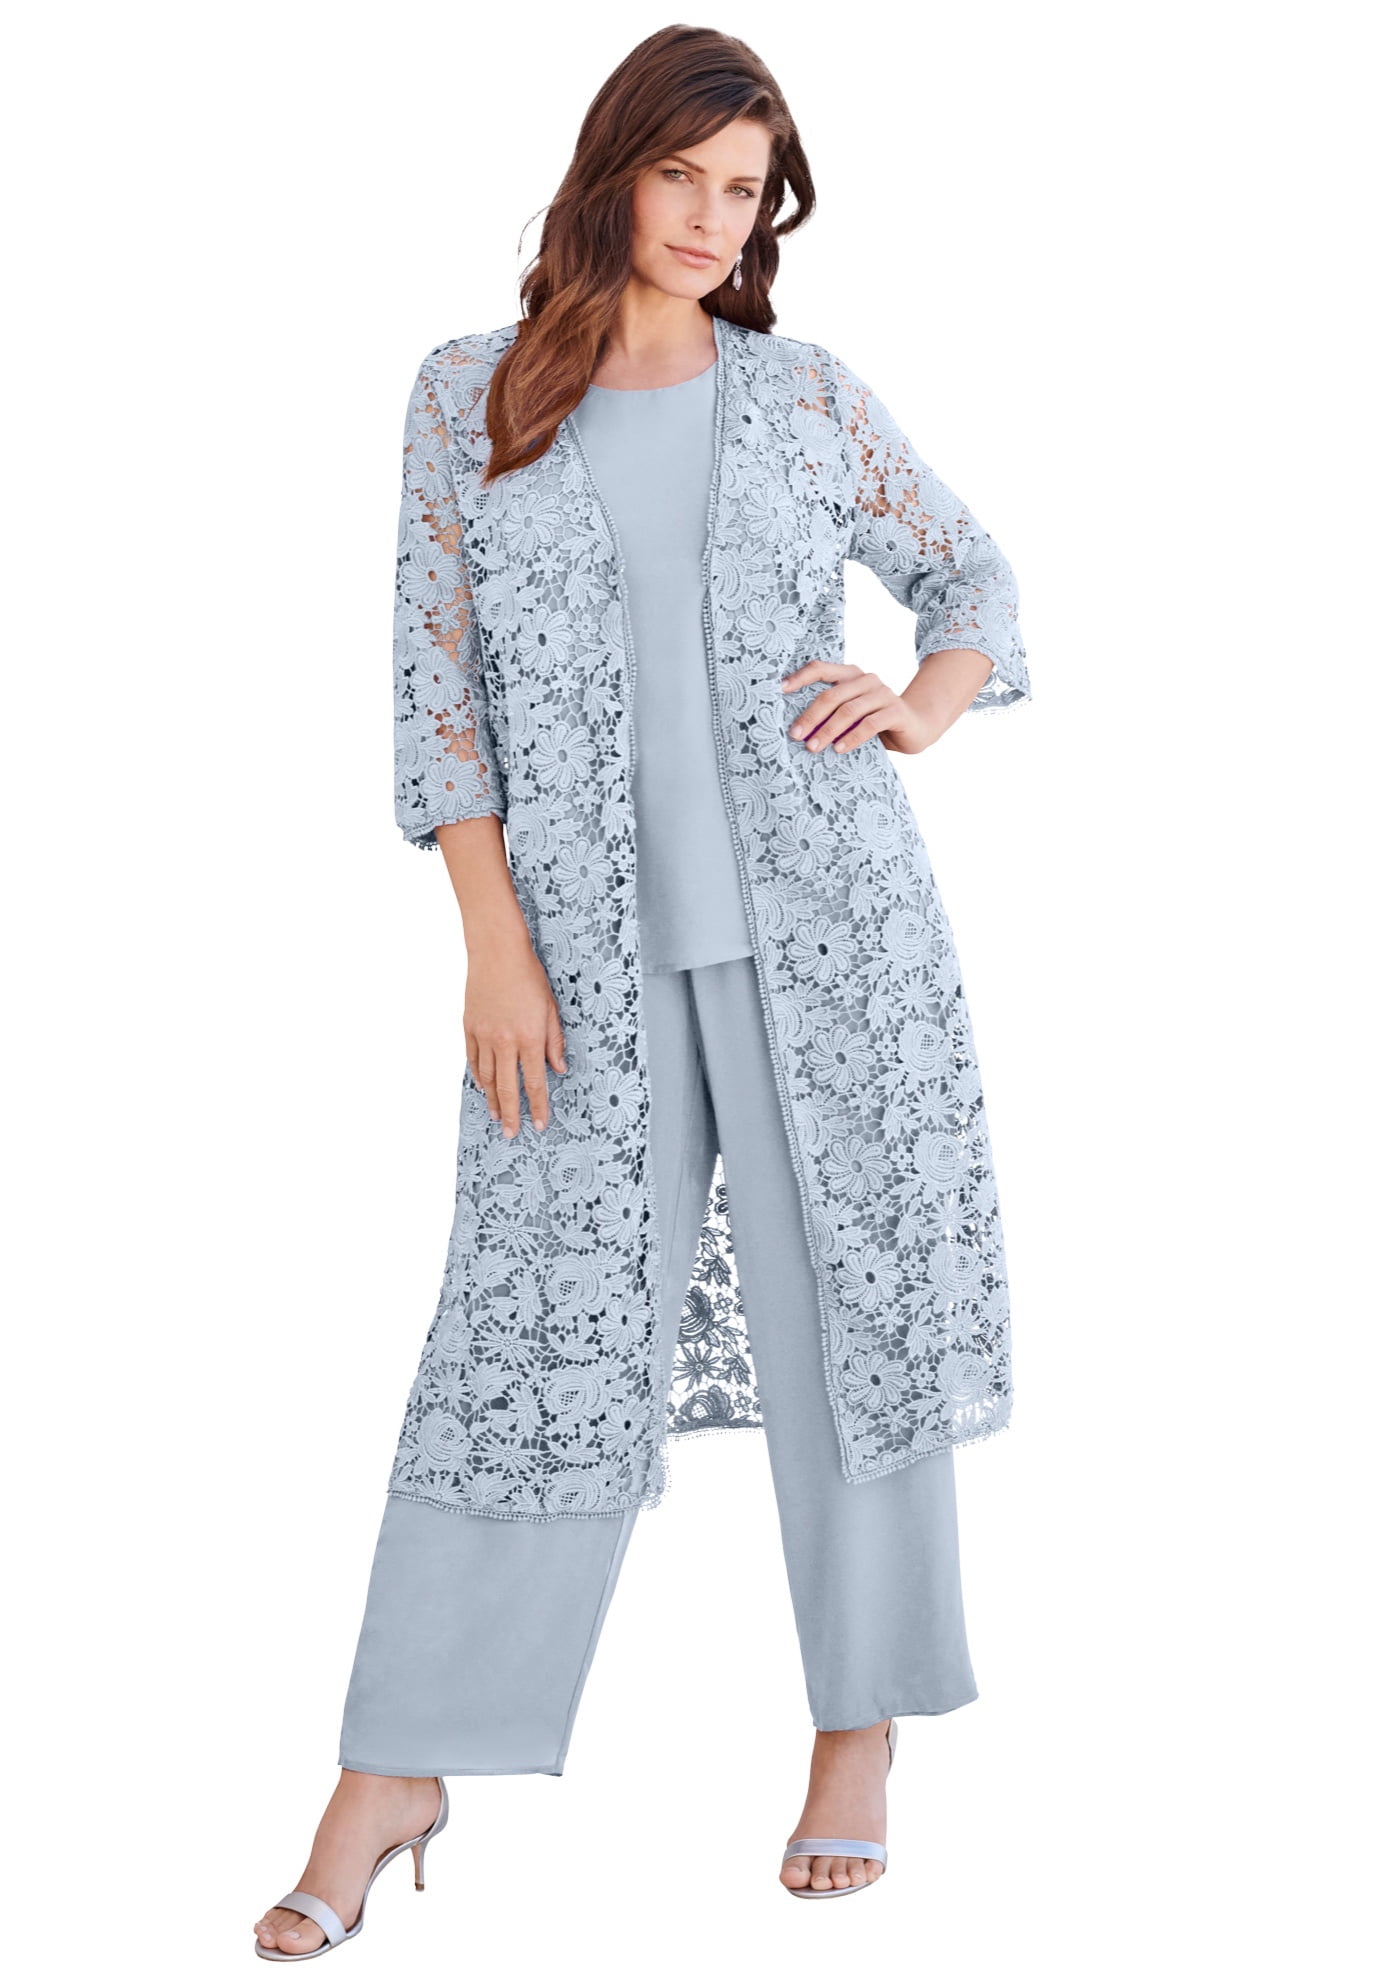 Trivial uudgrundelig kan ikke se Roaman's Women's Plus Size Three-Piece Lace Duster & Pant Suit Formal  Evening Wear Set, Mother Of The Bride Outfit - Walmart.com